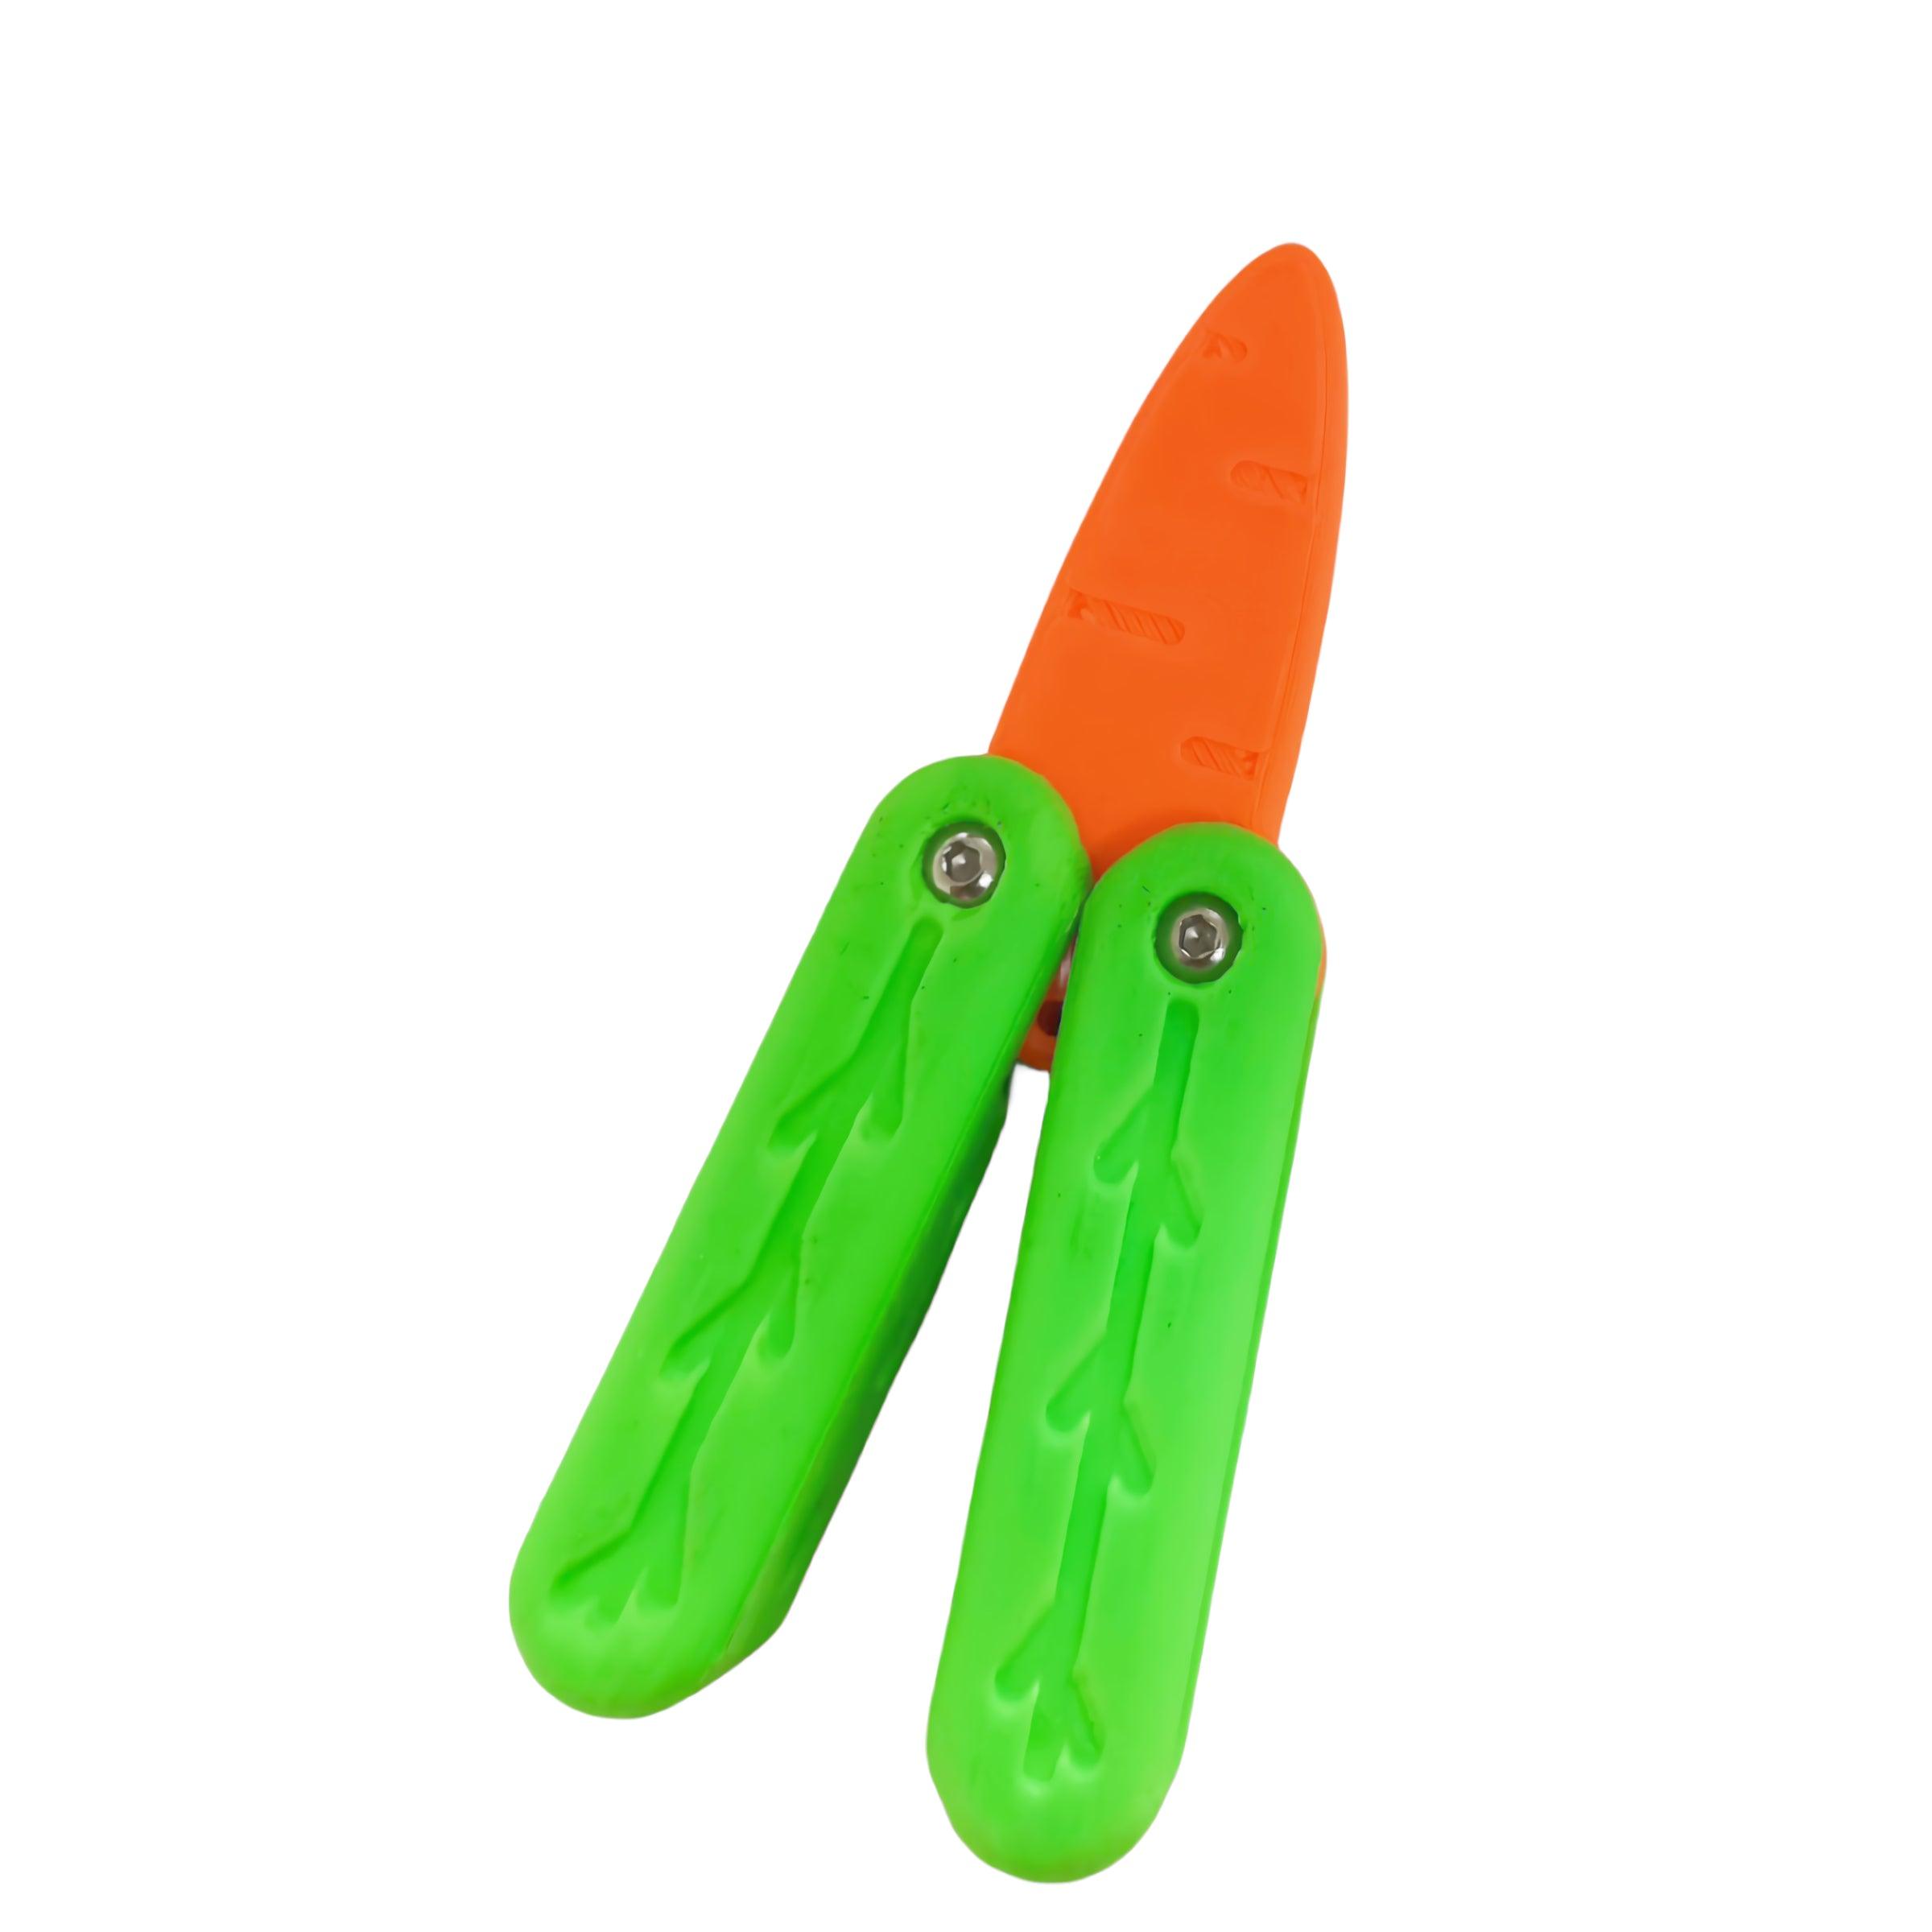 3D Gravity Carrot Knife Butterfly Gun Plastic Fidget Anxiety Stress Relief  Toys